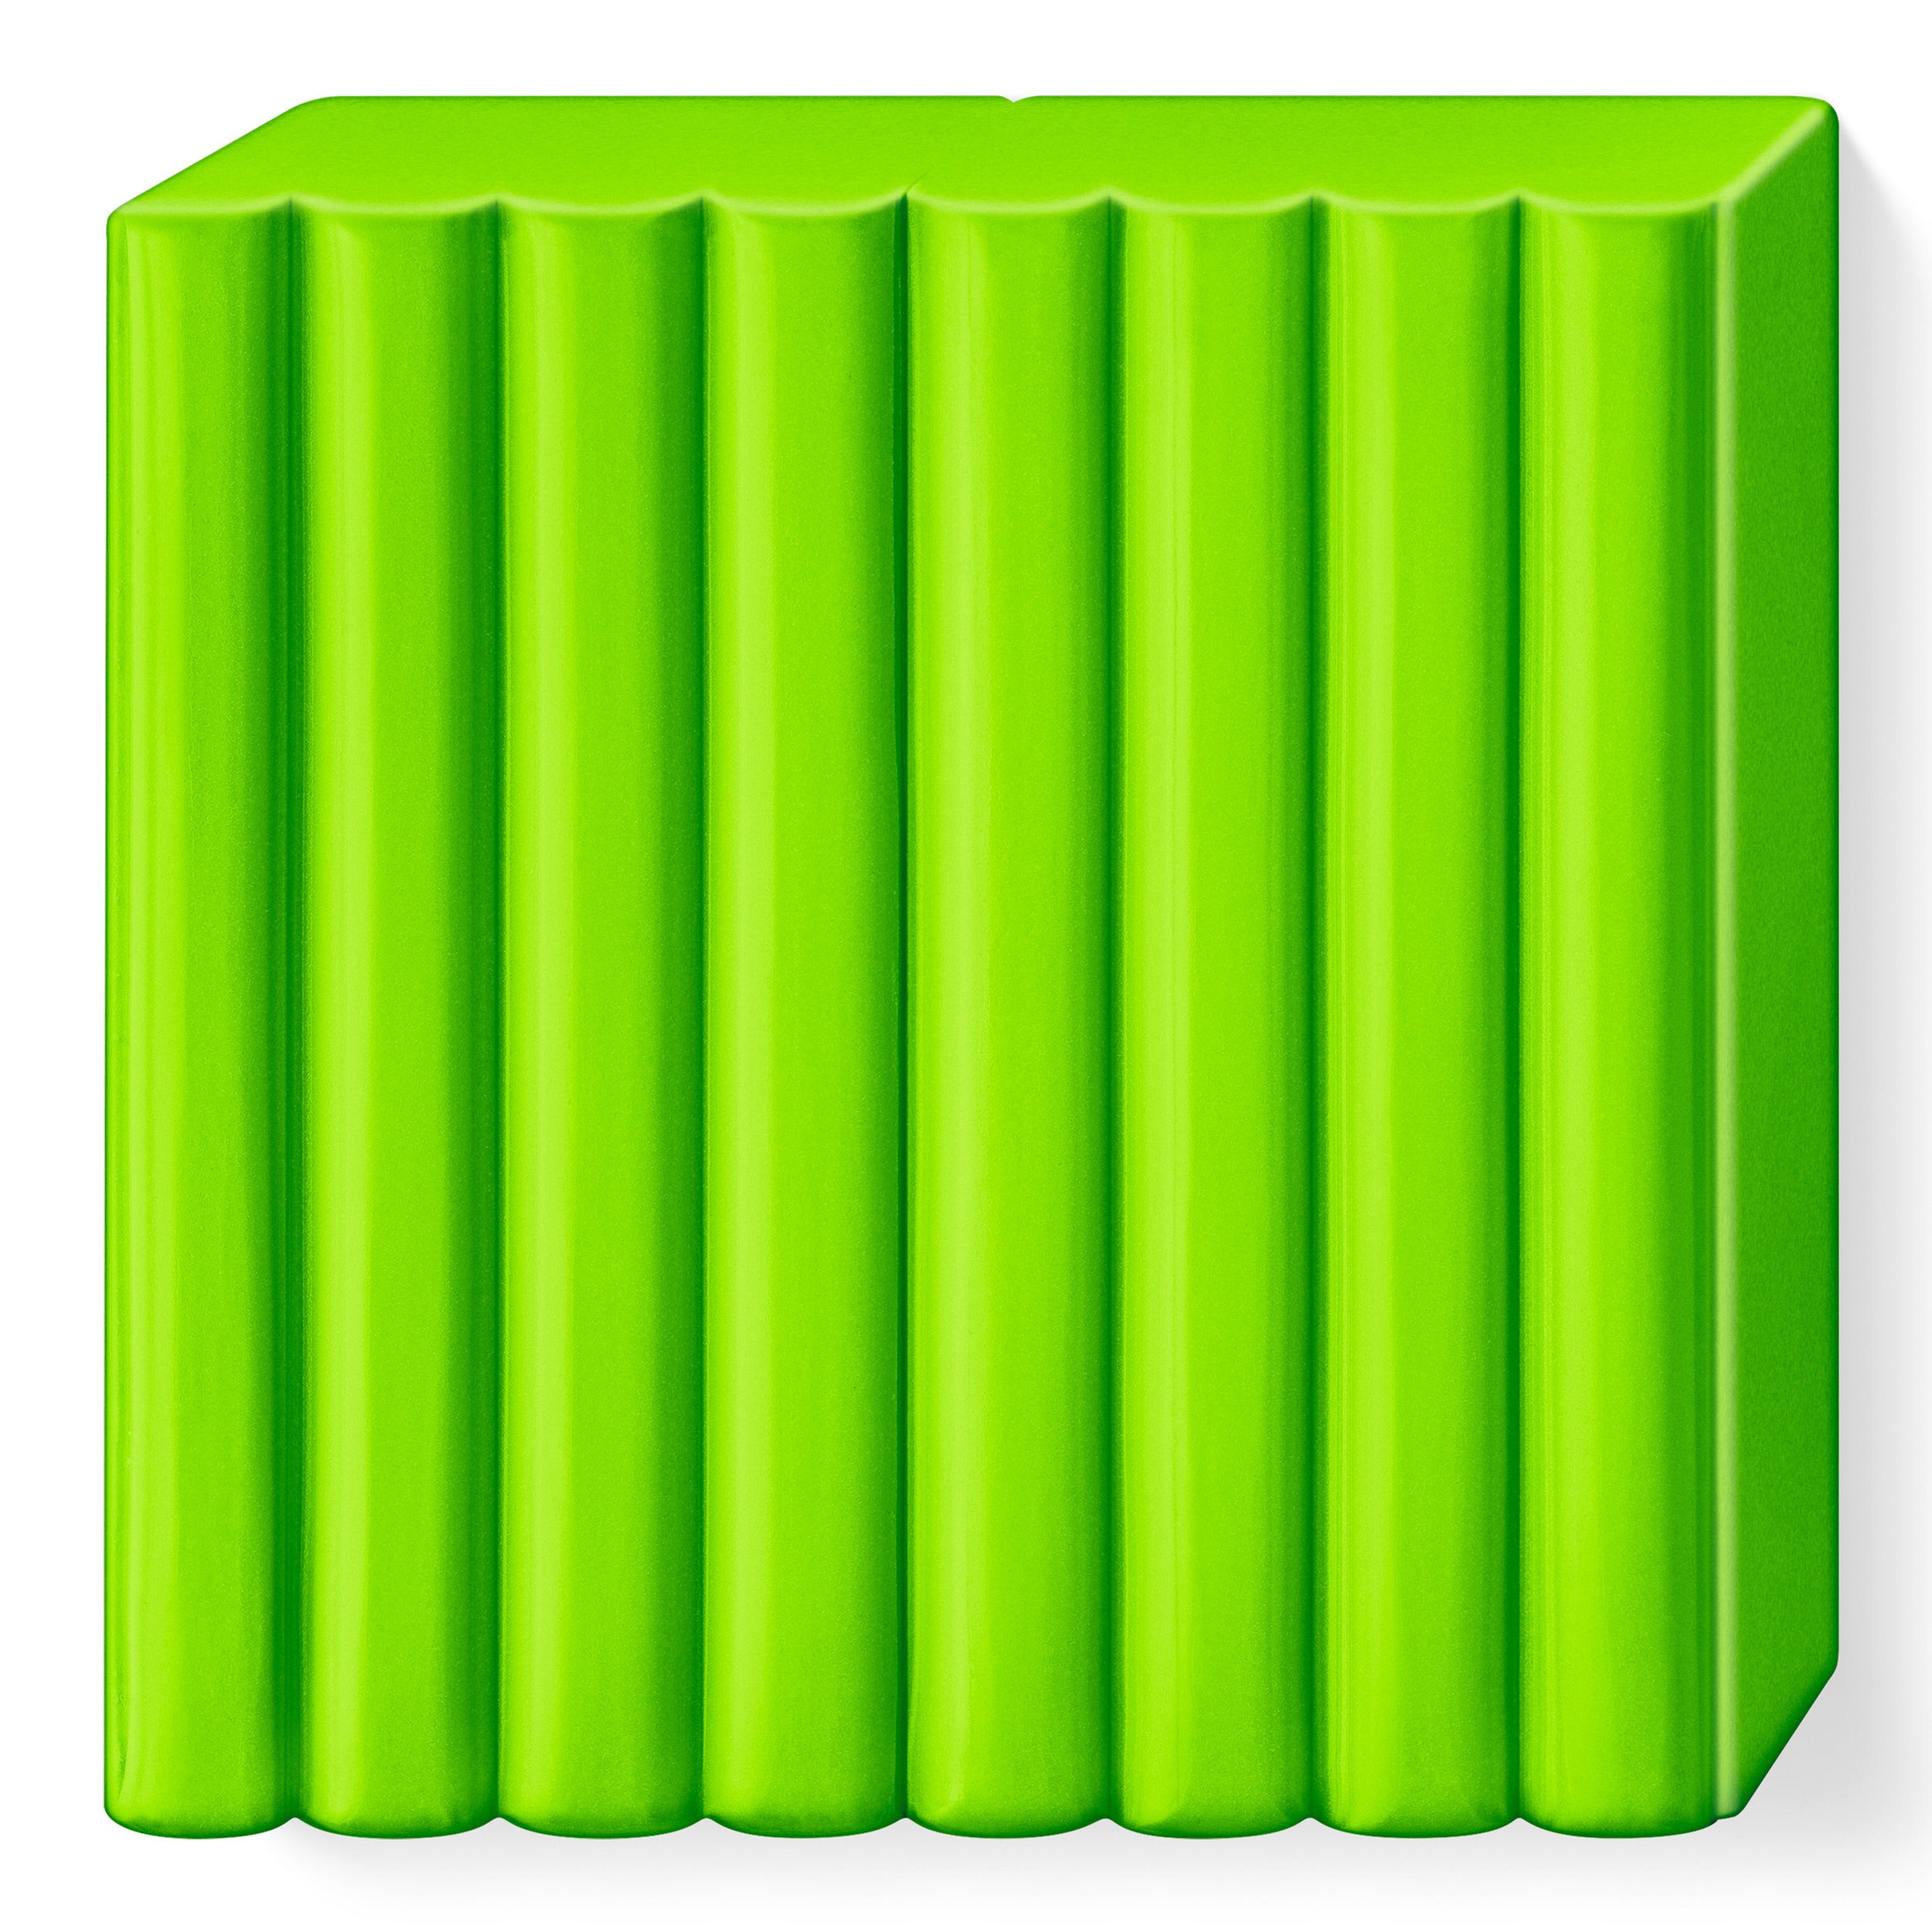 Fimo Soft Polymer Clay Standard Block 57g (2oz) - Apple Green